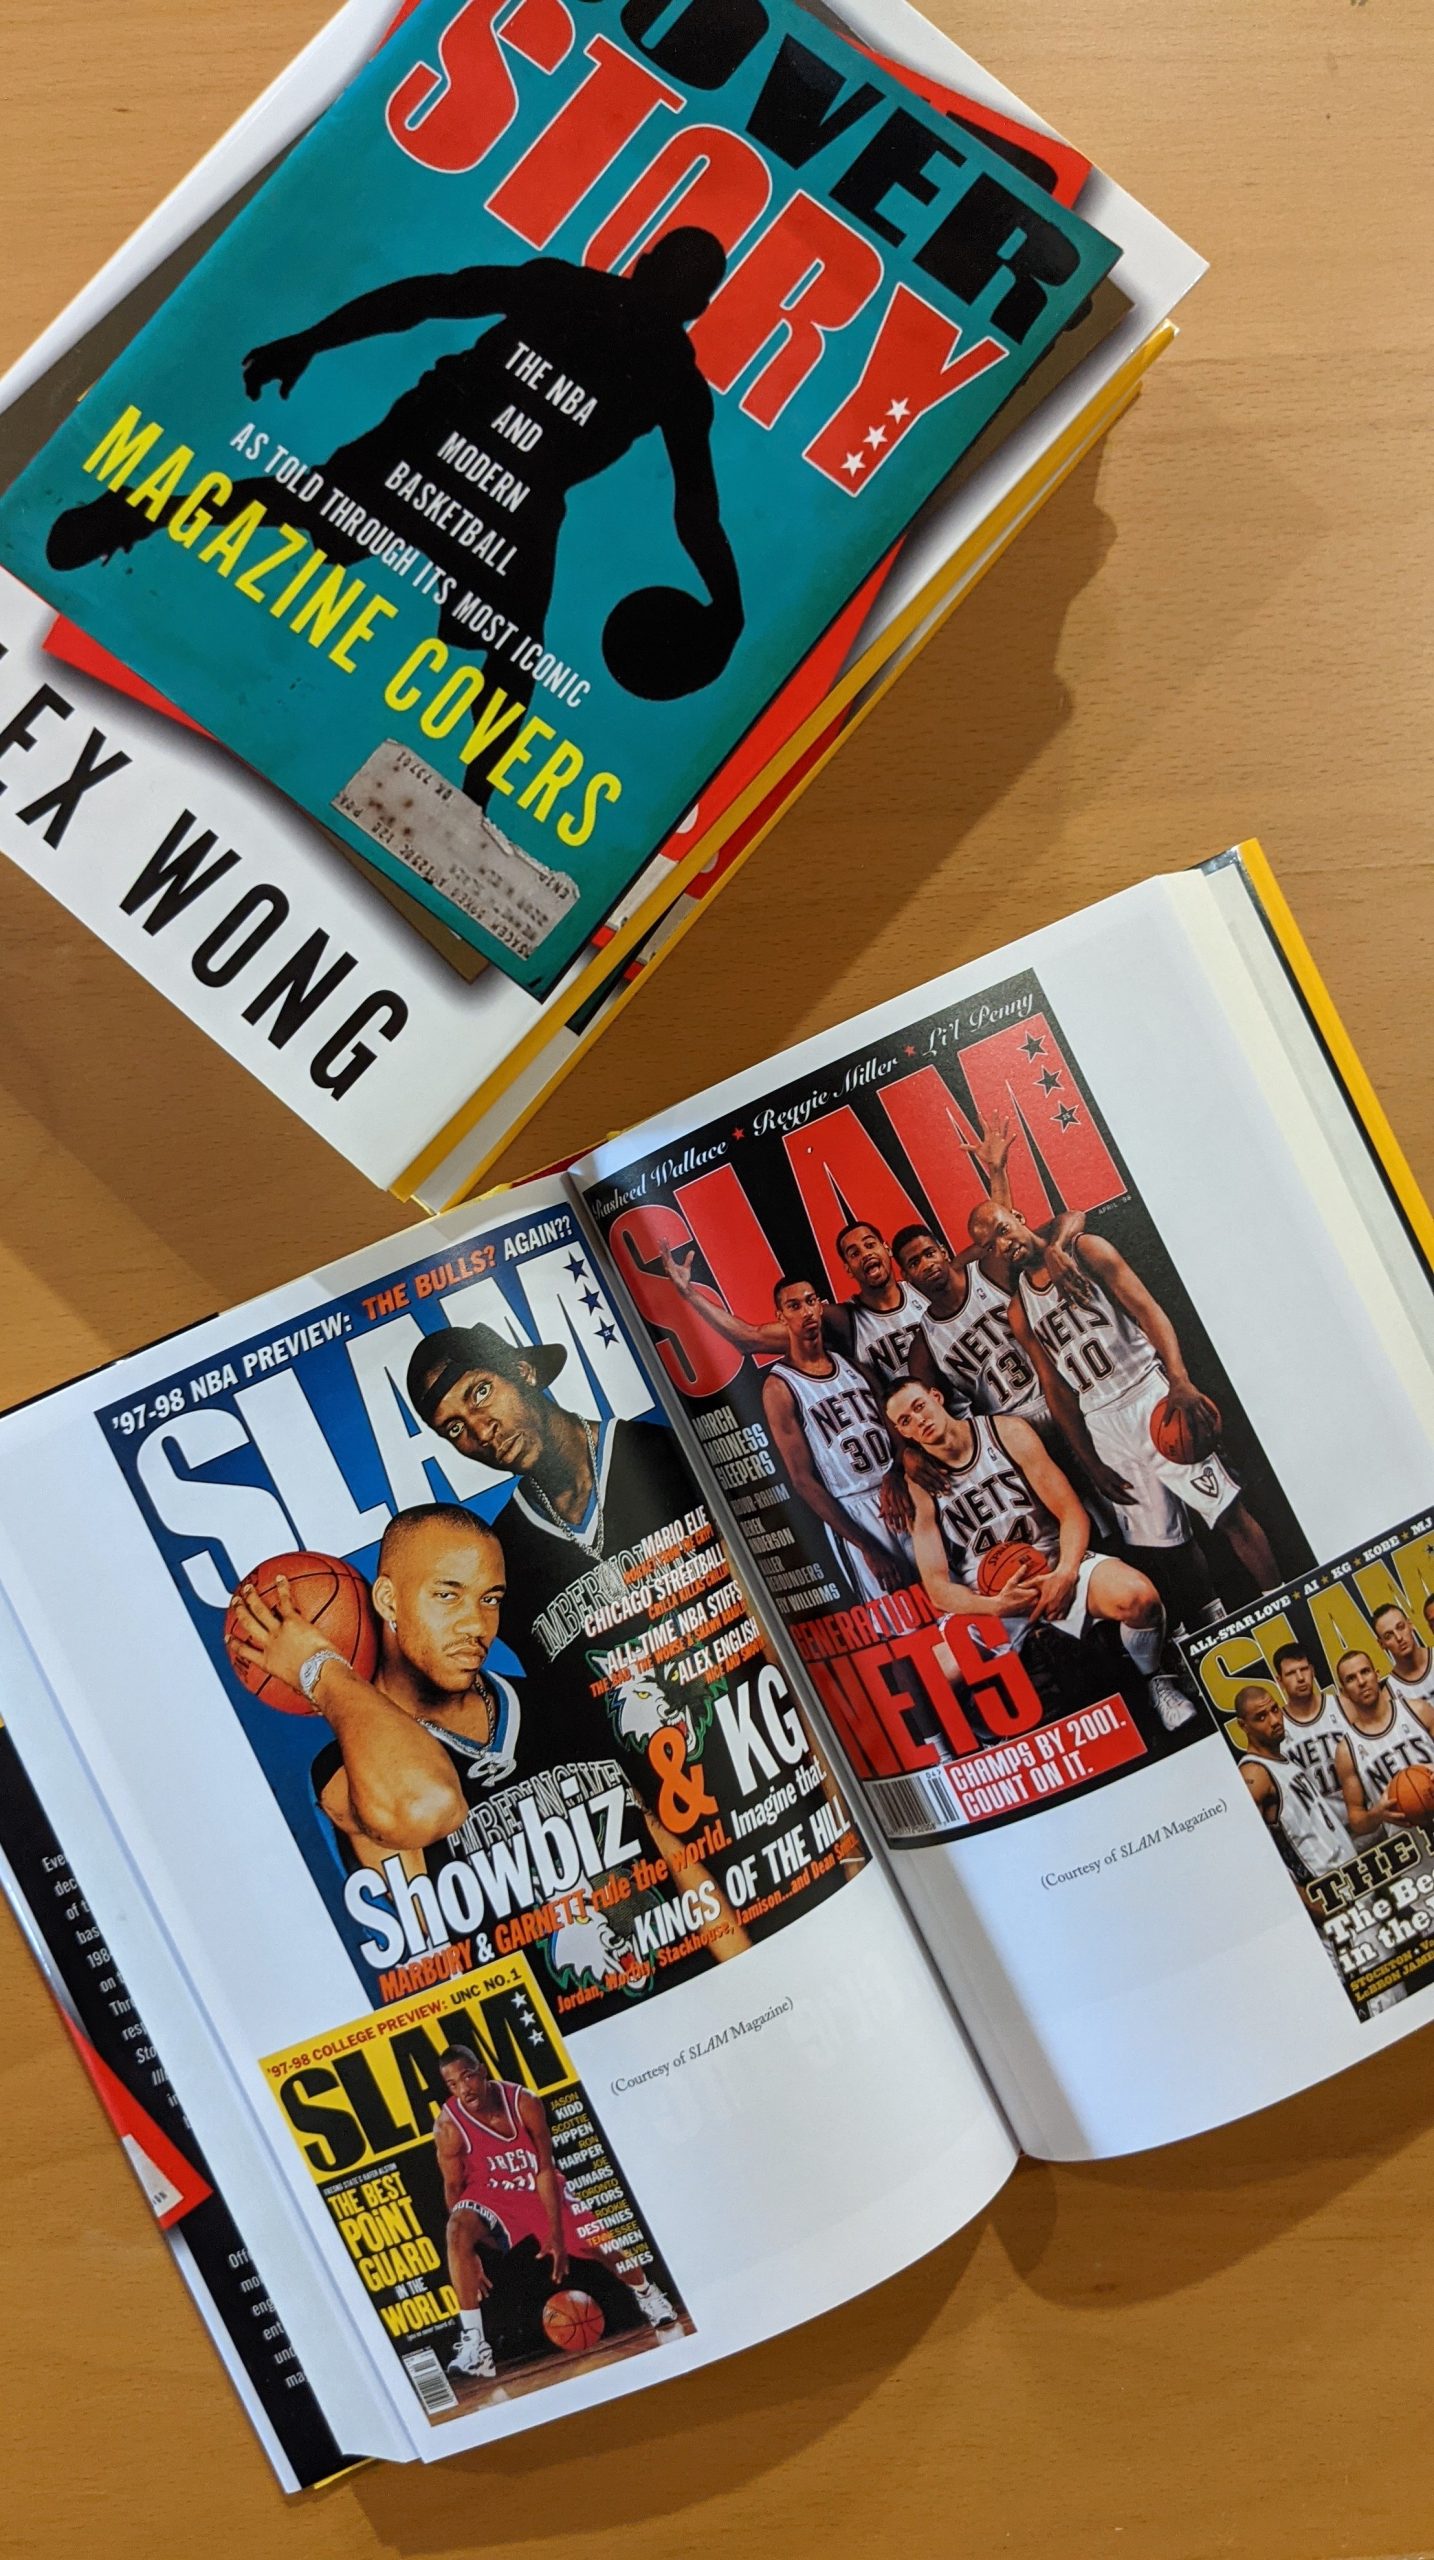 250 SLAM Magazine Covers ideas